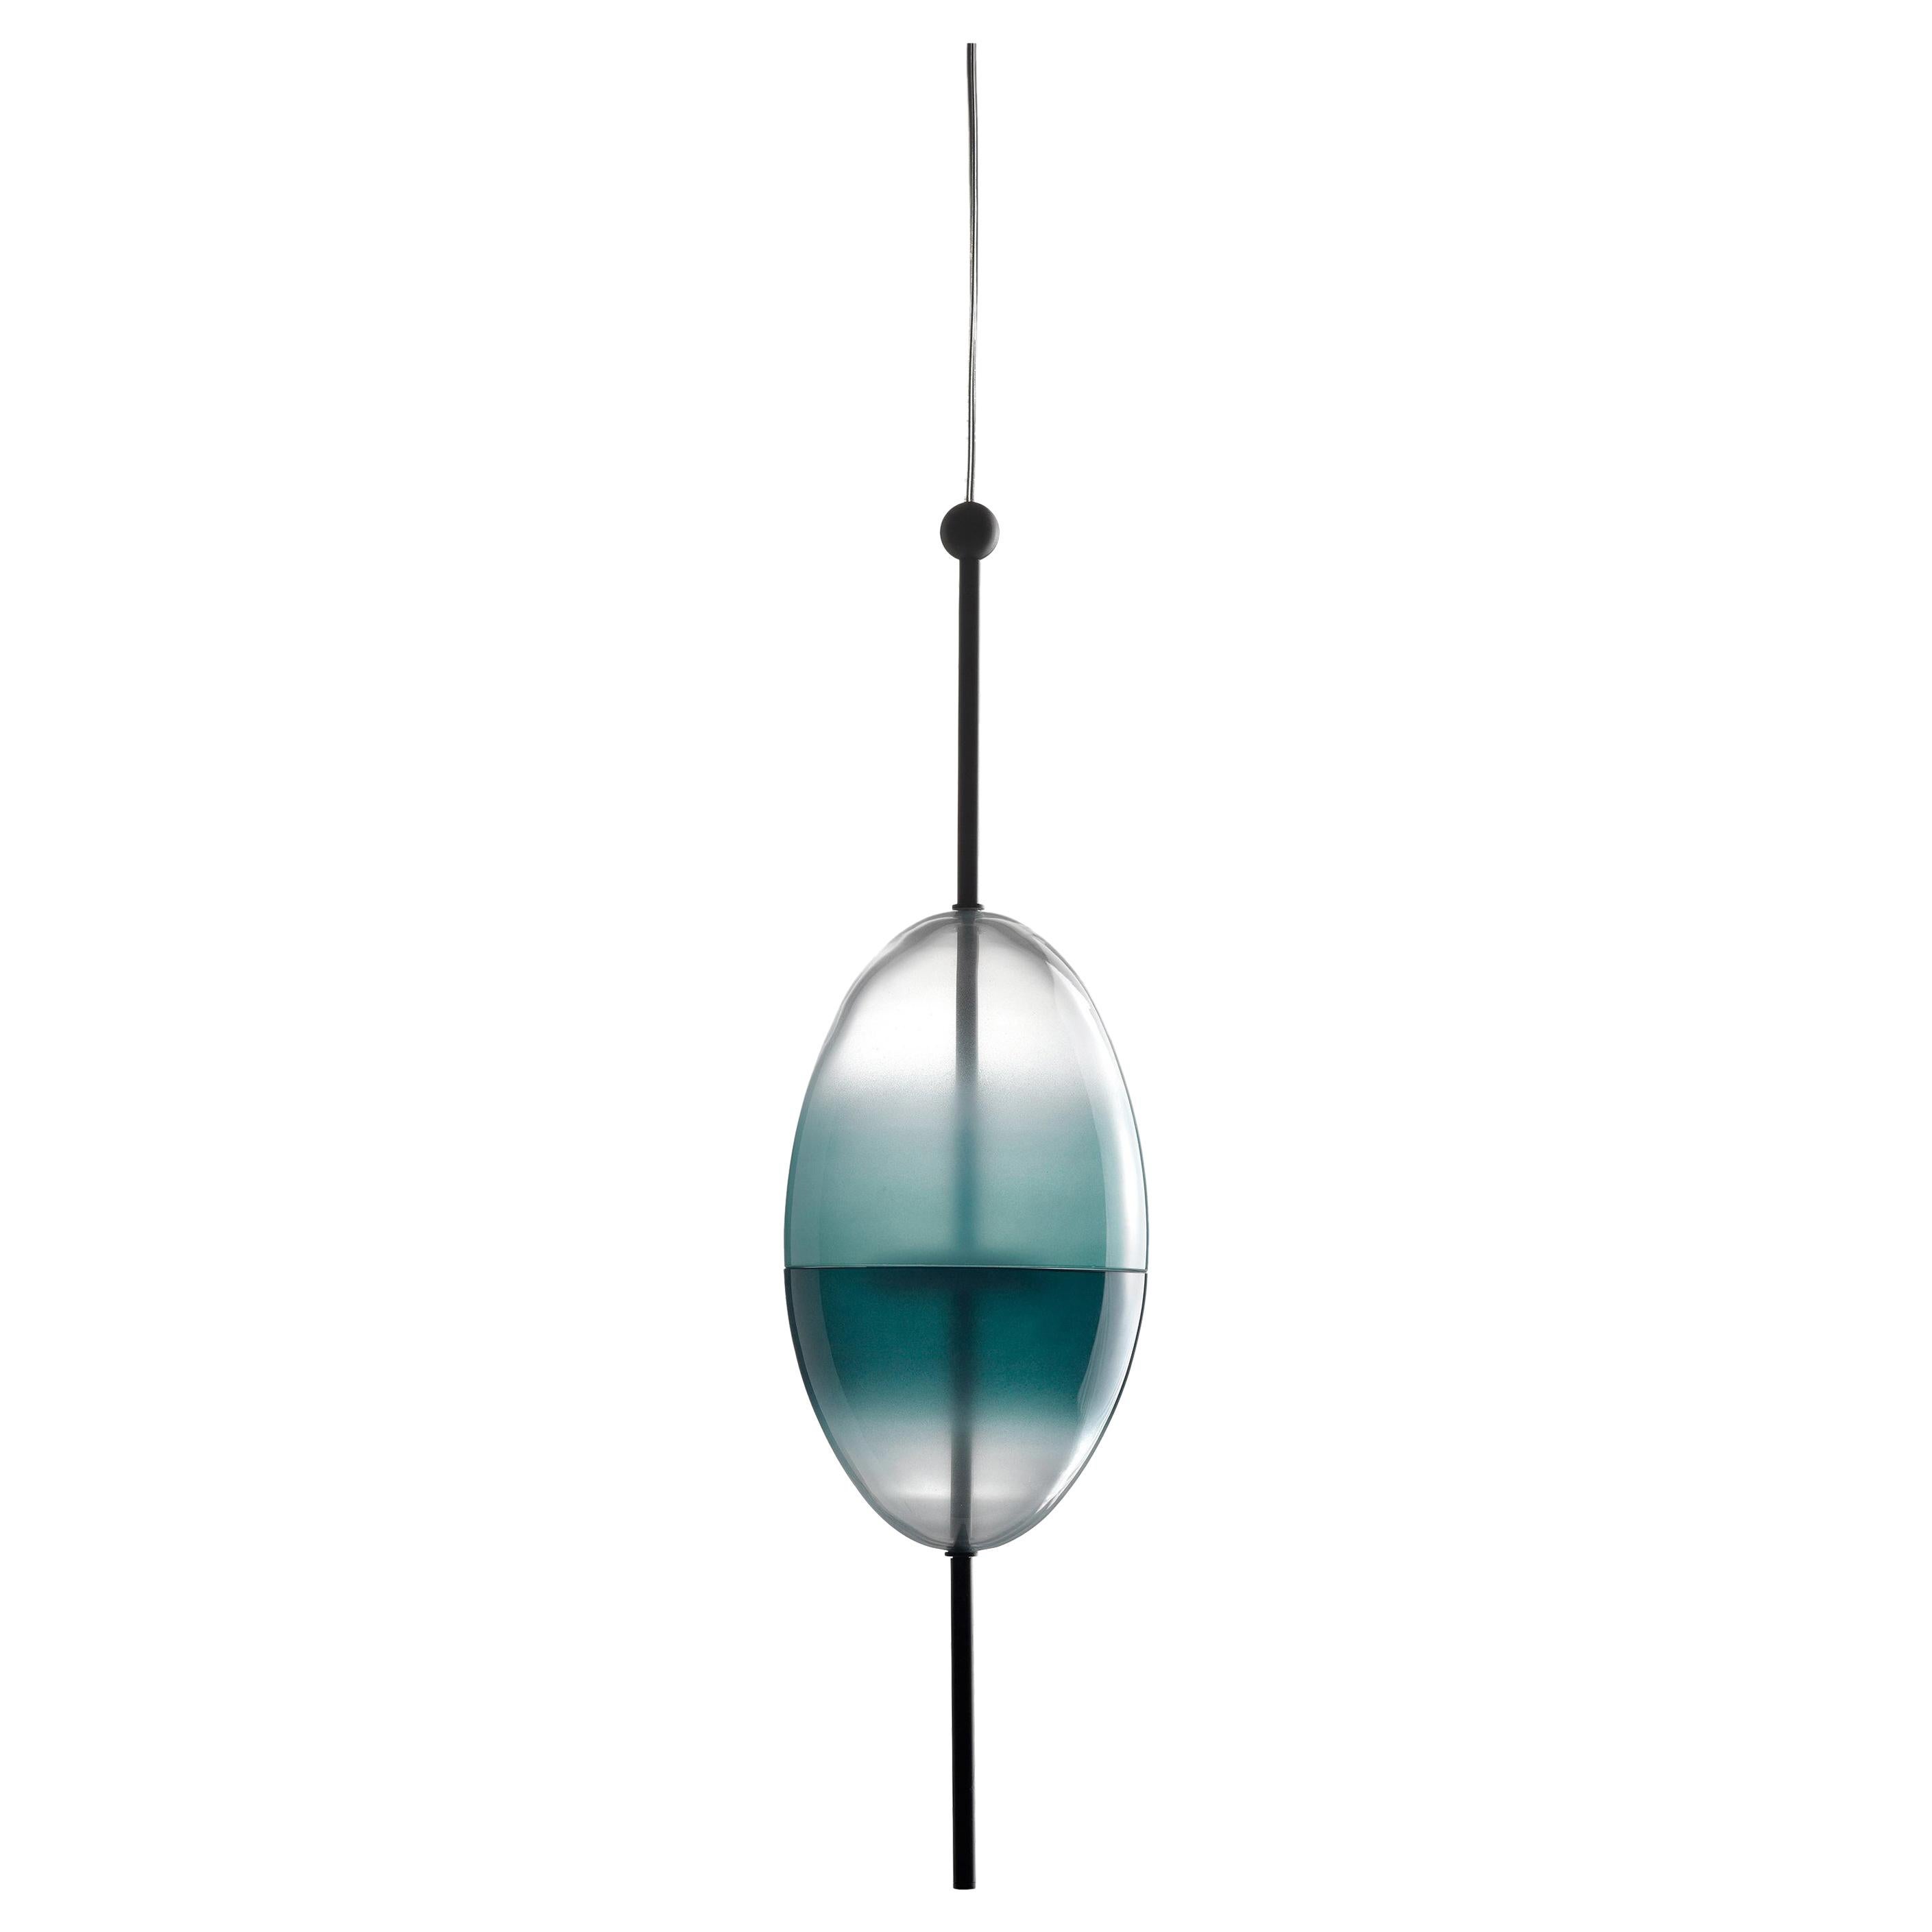 Flow[T] S1 by Nao Tamura — Murano Blown Glass Pendant Lamp